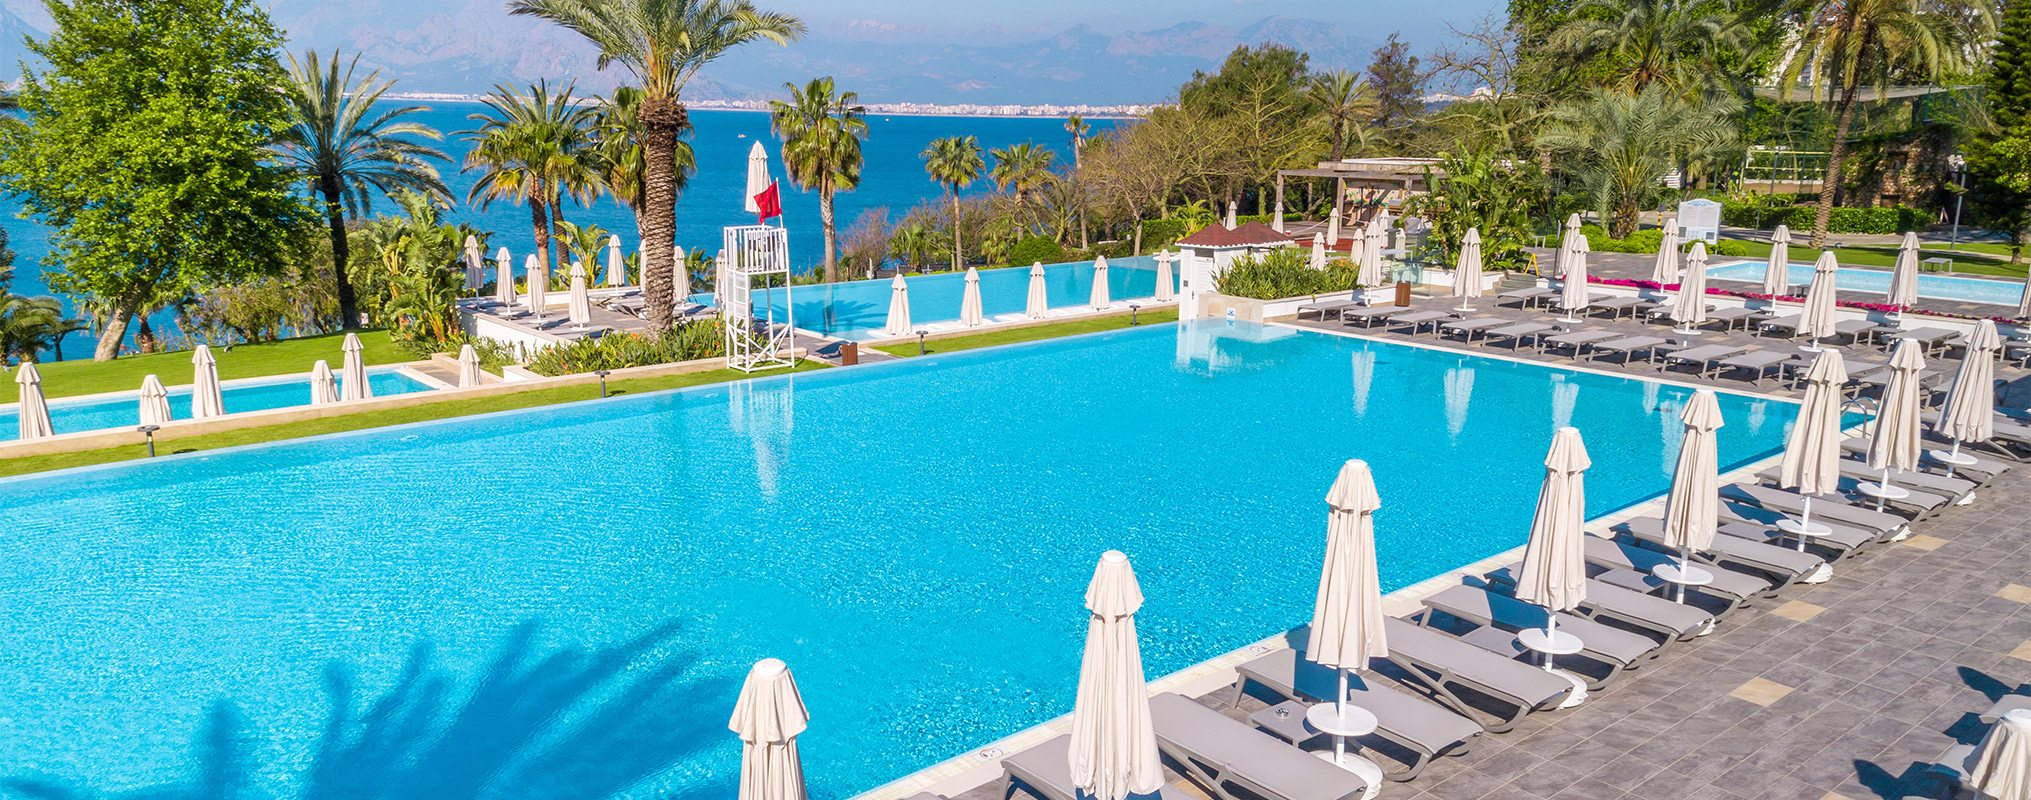 Akra Hotels Mainpage Beach And Pools Card